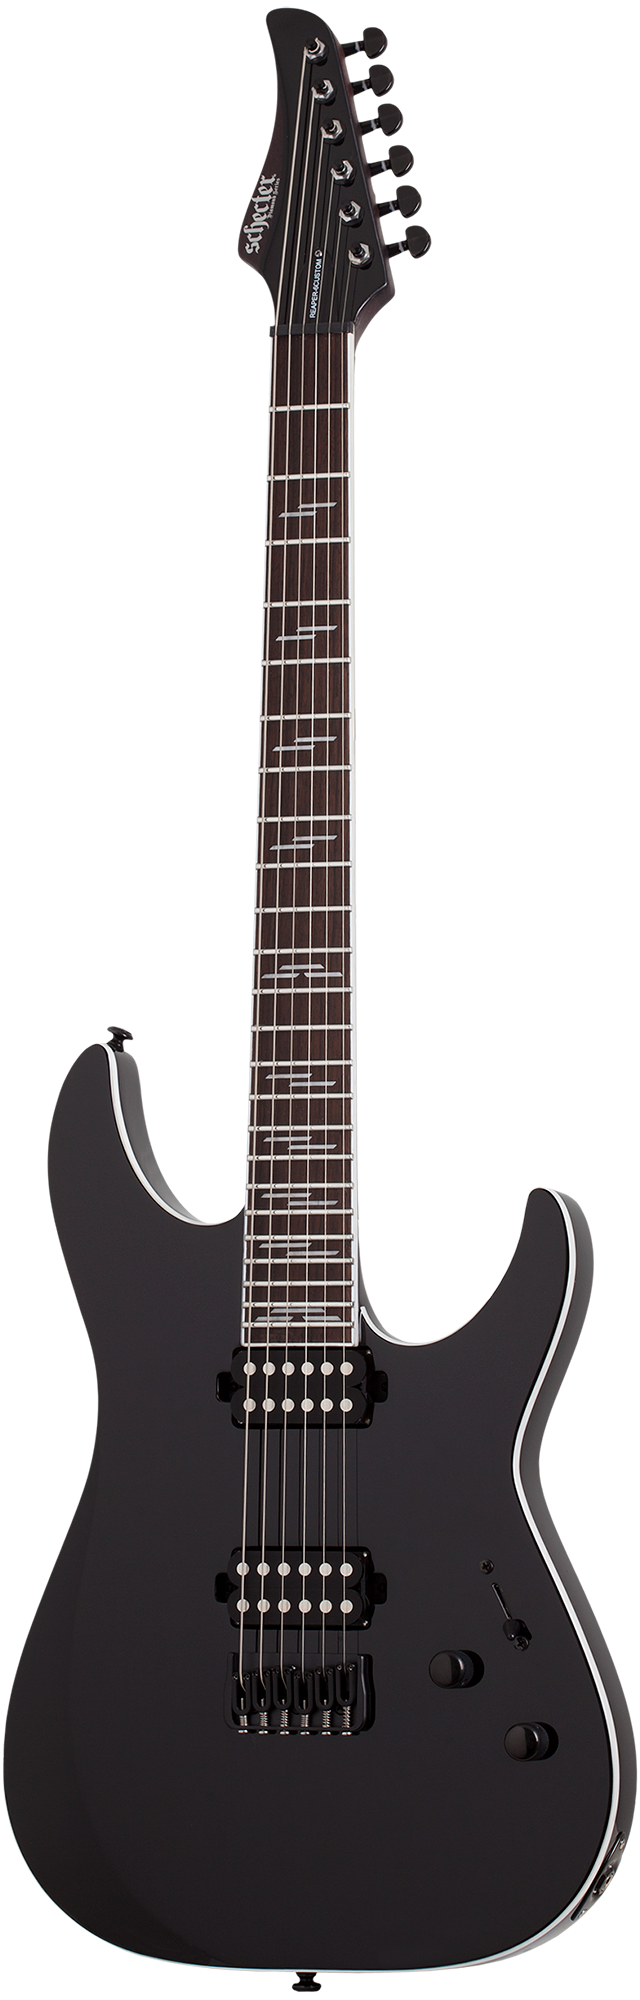 Schecter Reaper-6 Custom Electric Guitar - Gloss Black